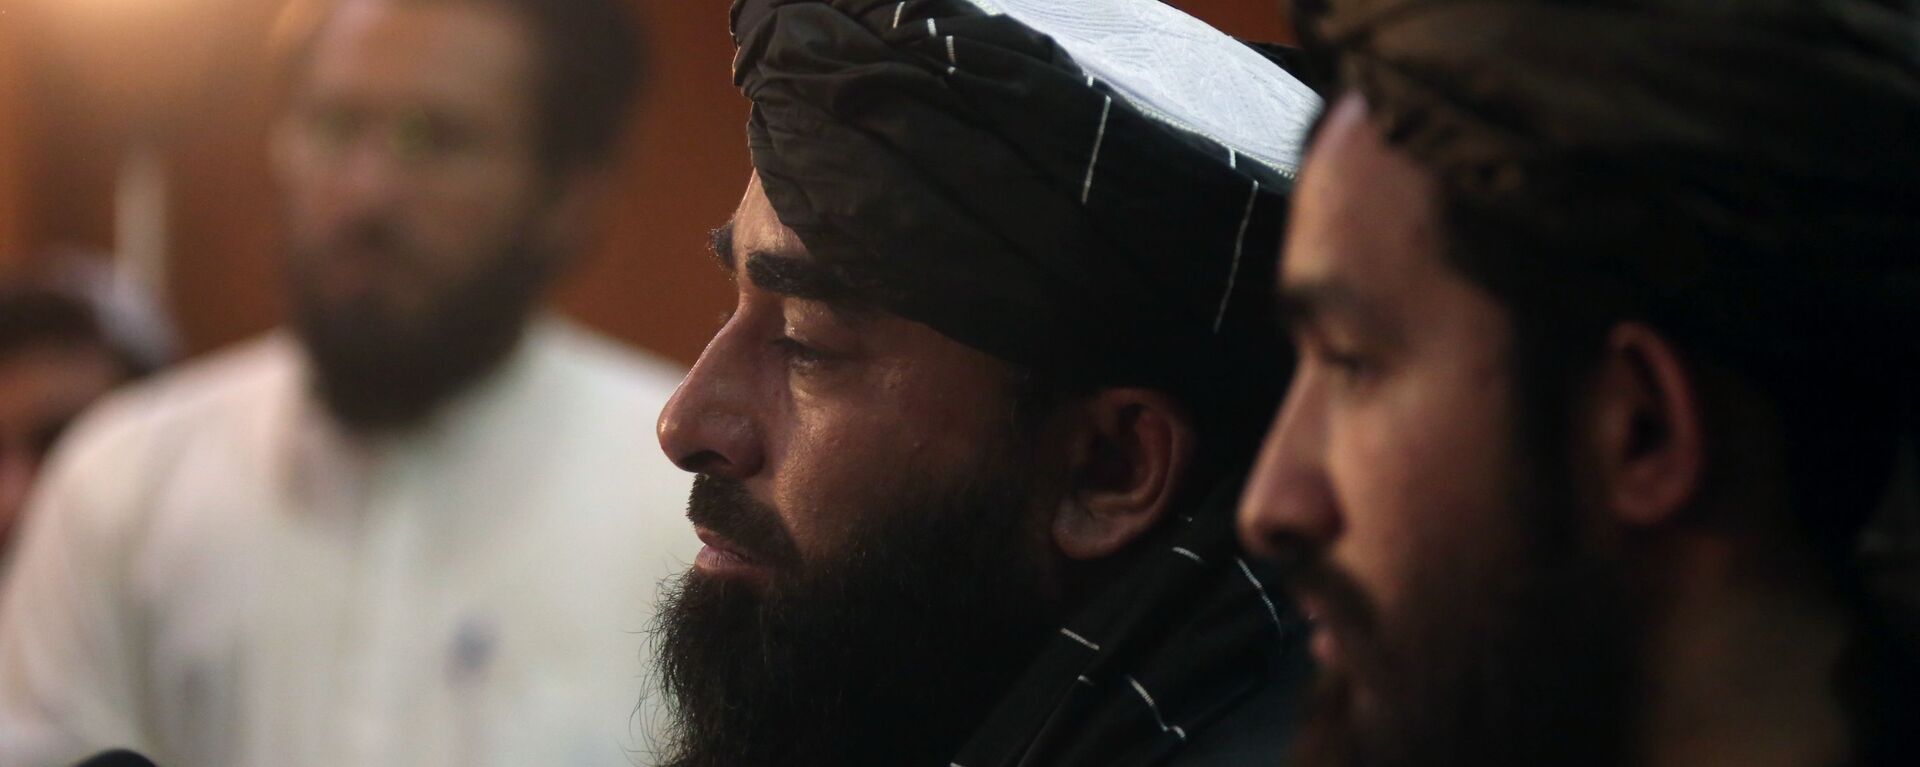 Представитель движения Талибан Забиулла Муджахид во время пресс-конференции в Кабуле (17 августа 2021). Афганистан - Sputnik Արմենիա, 1920, 05.09.2021